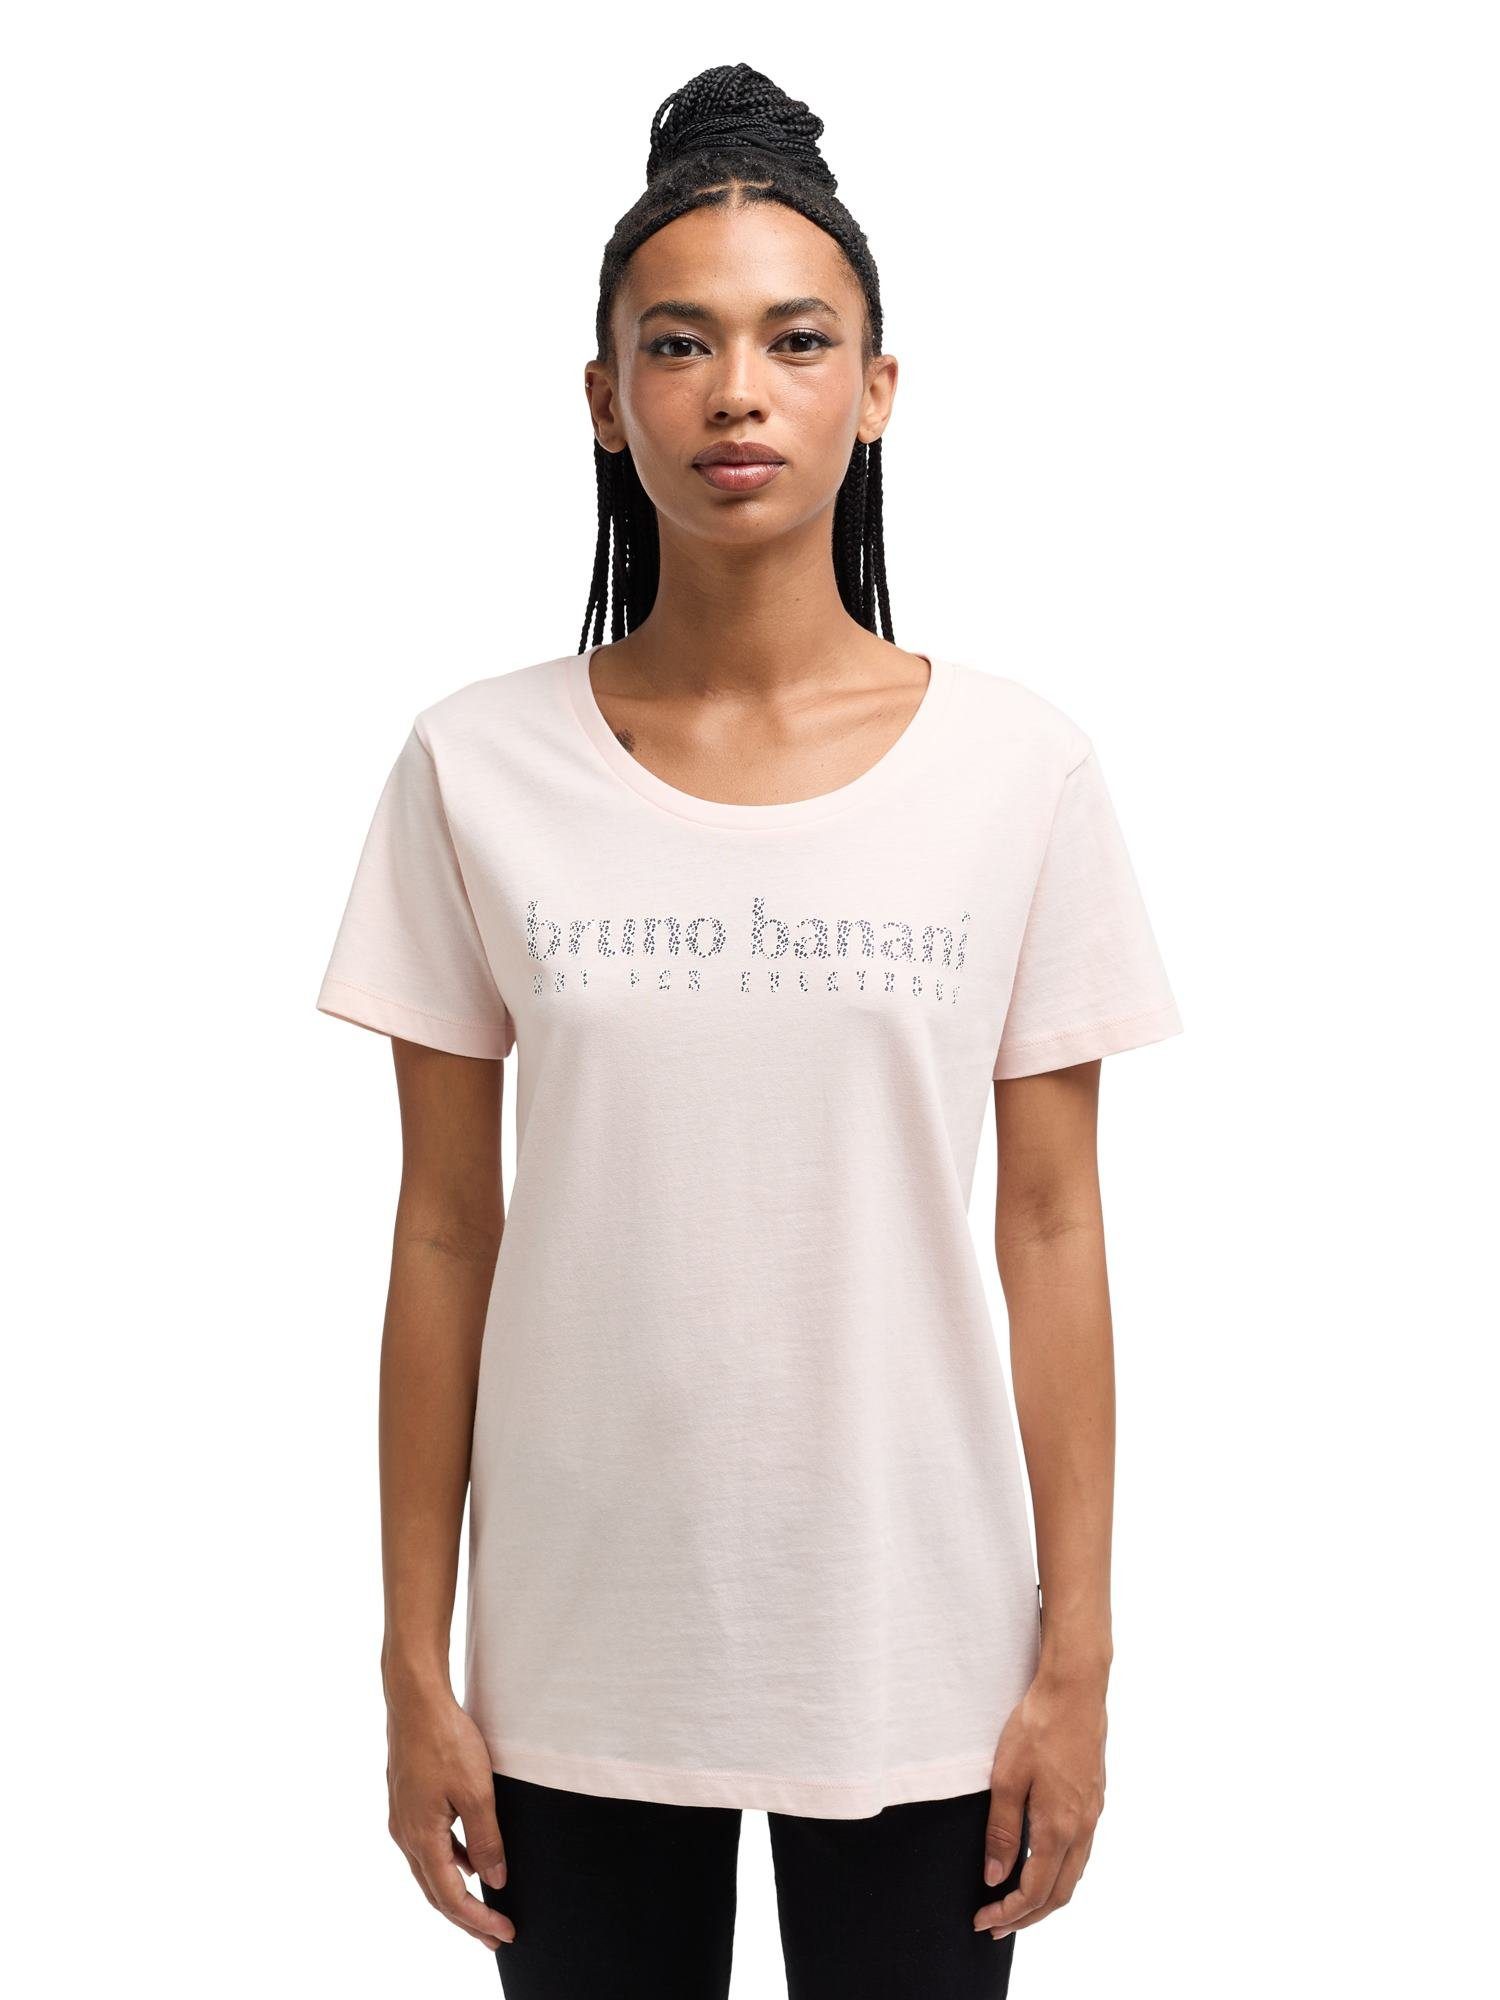 Bruno Avery T-Shirt Banani Rosa